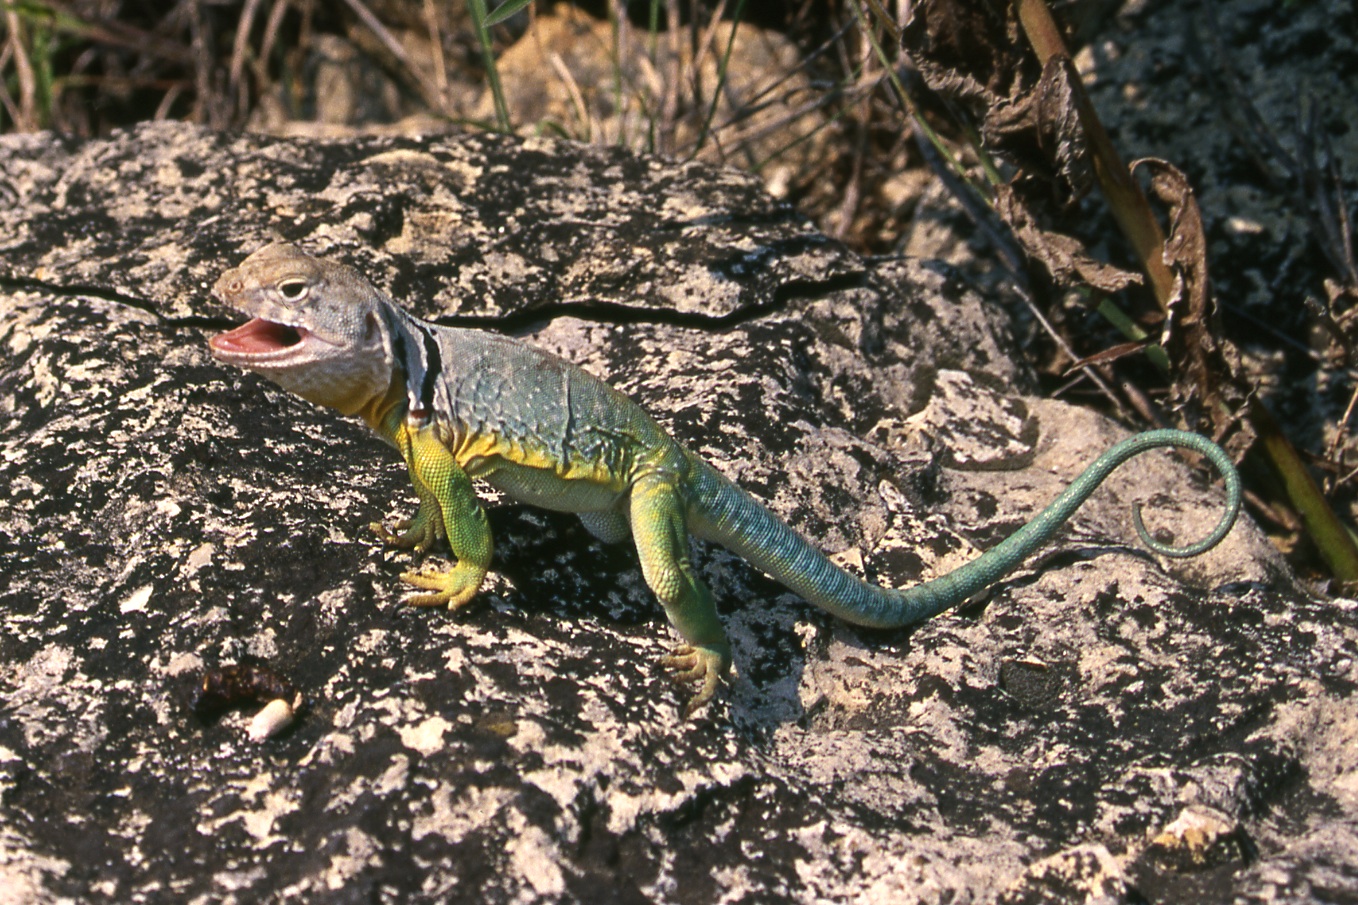 Collard lizard